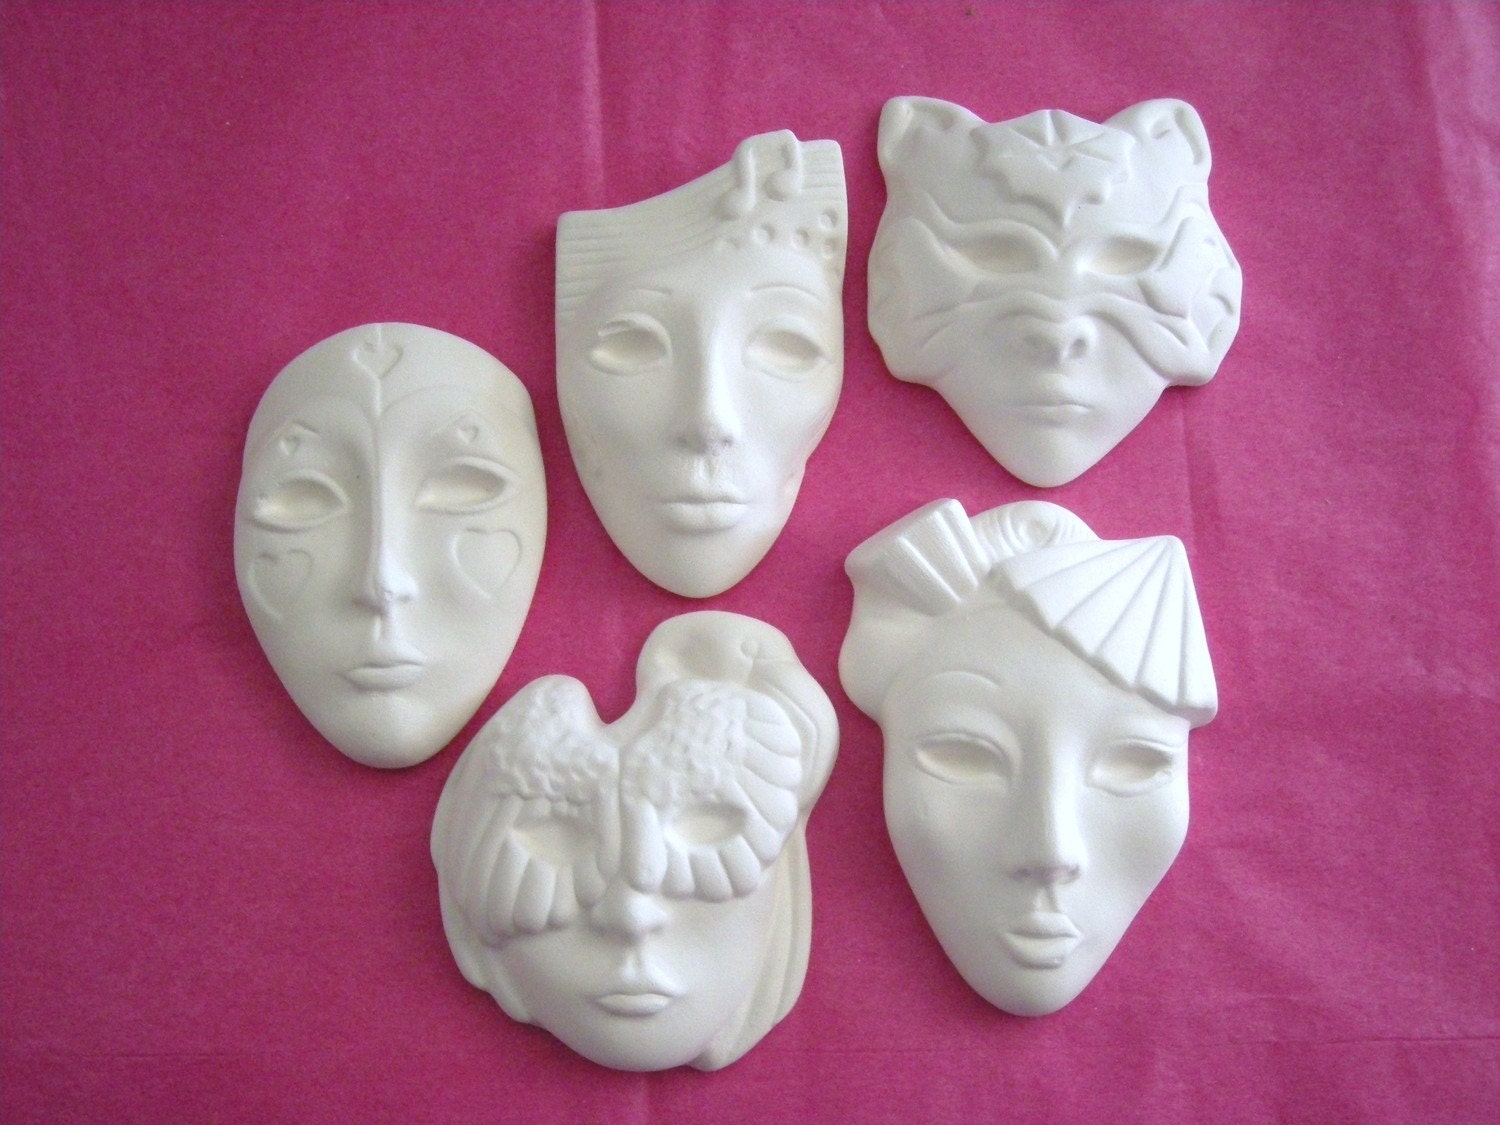 Ceramic Face Mask